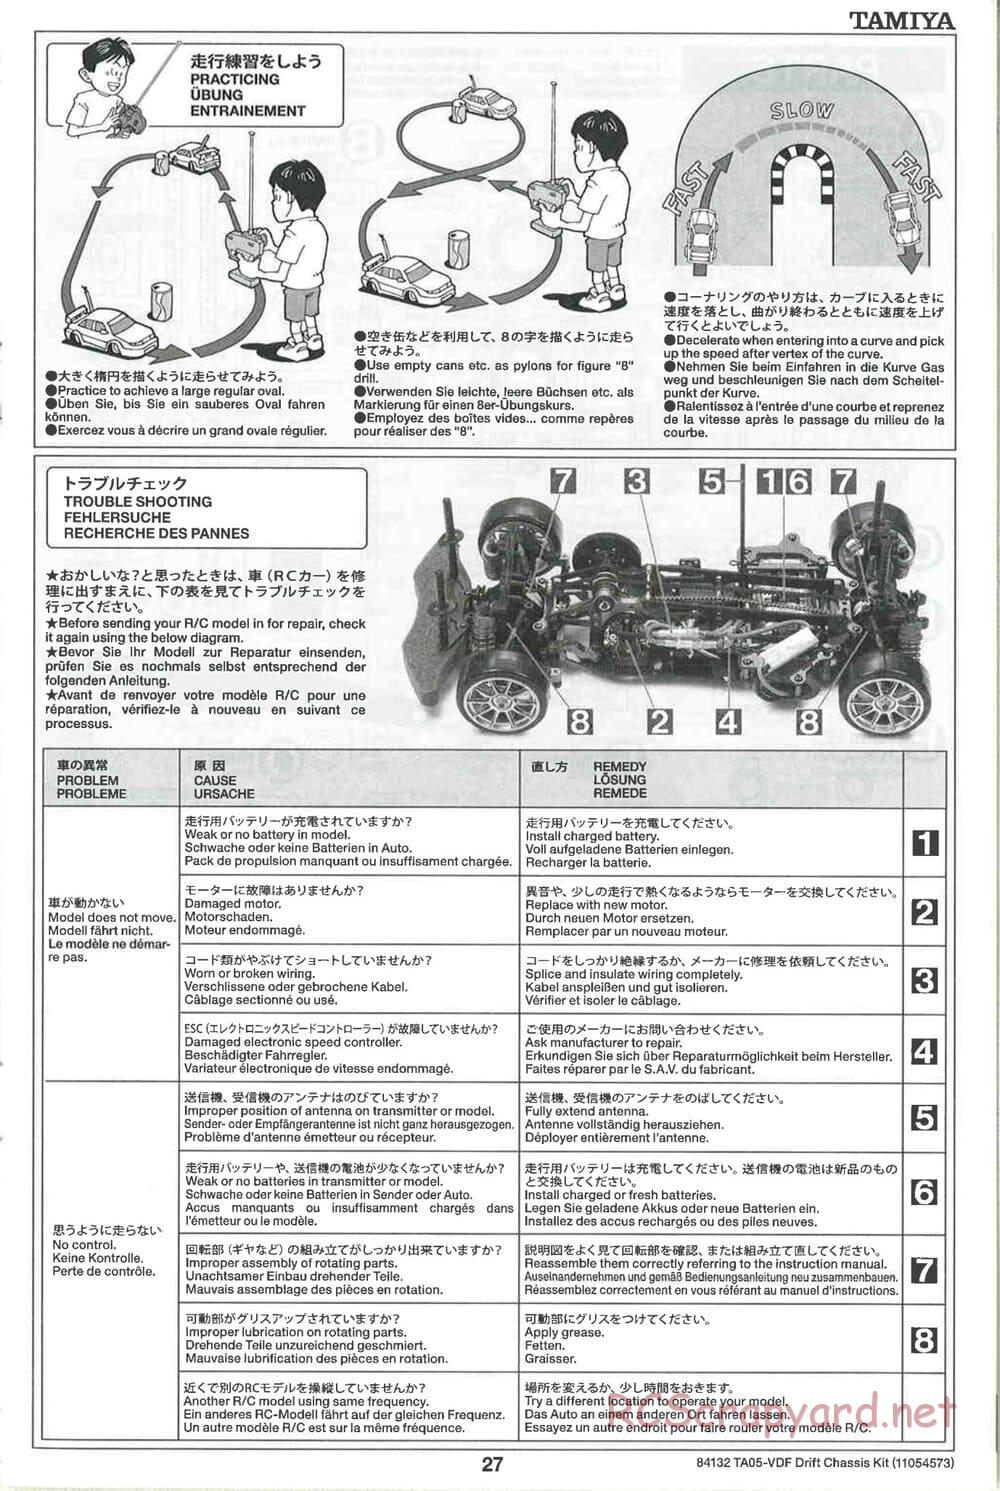 Tamiya - TA05-VDF Drift Spec Chassis - Manual - Page 27